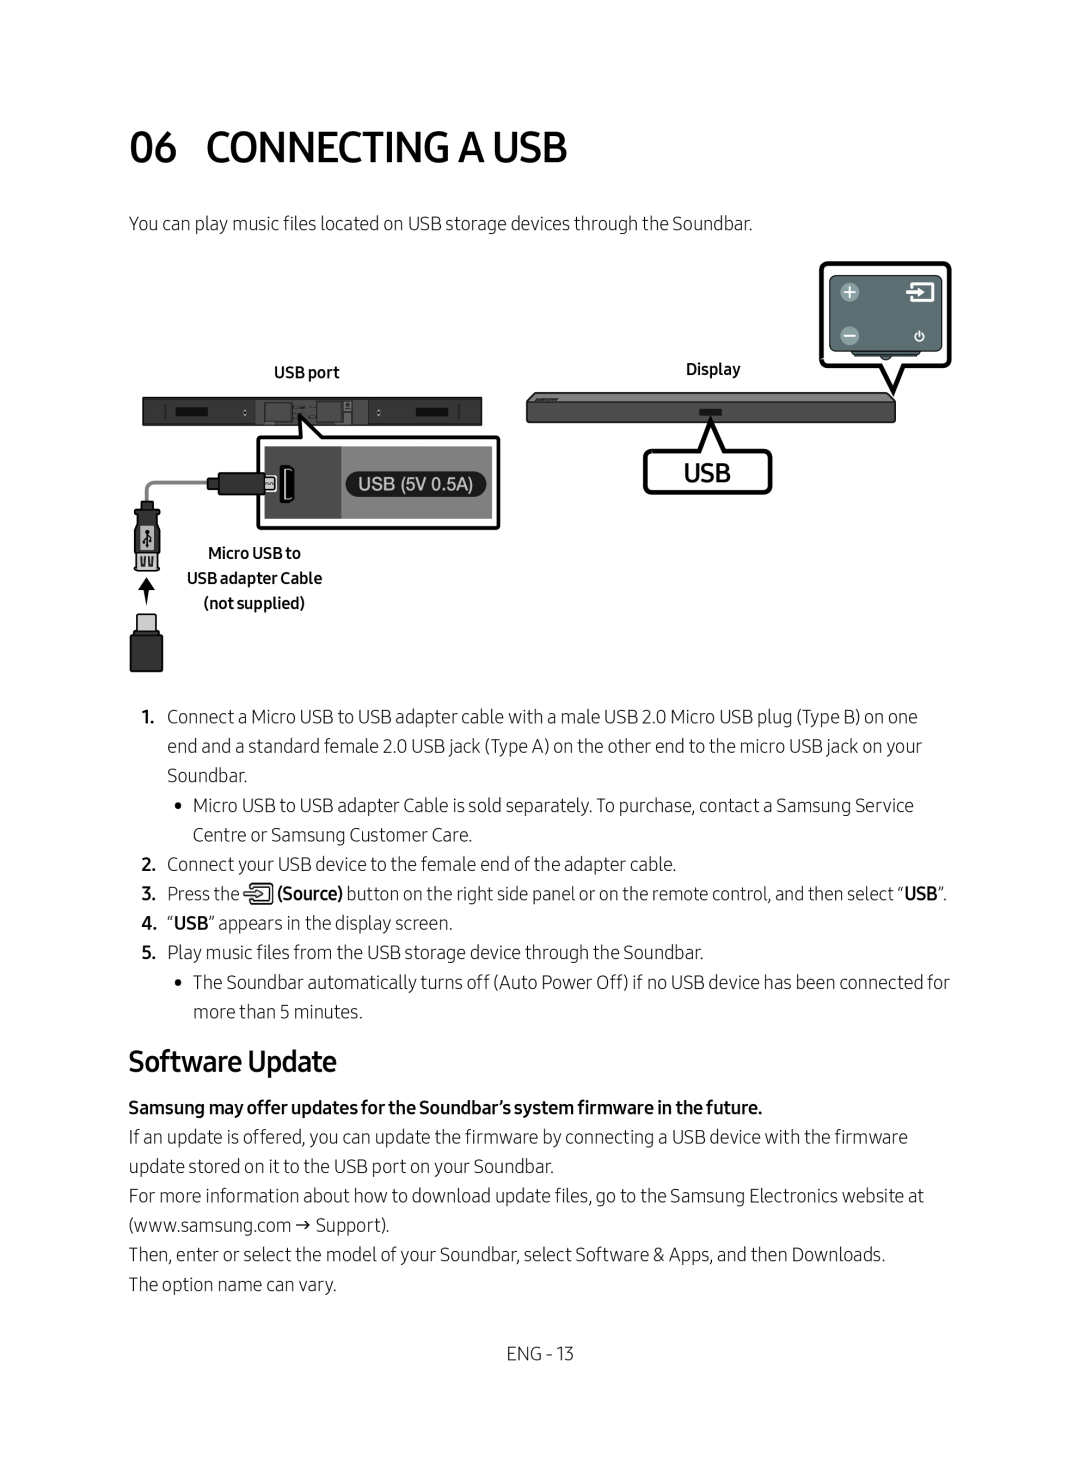 Samsung HW-M450/ZF, HW-M450/EN, HW-M450/ZG manual Connecting A Usb, Software Update, USB 5V 0.5A 